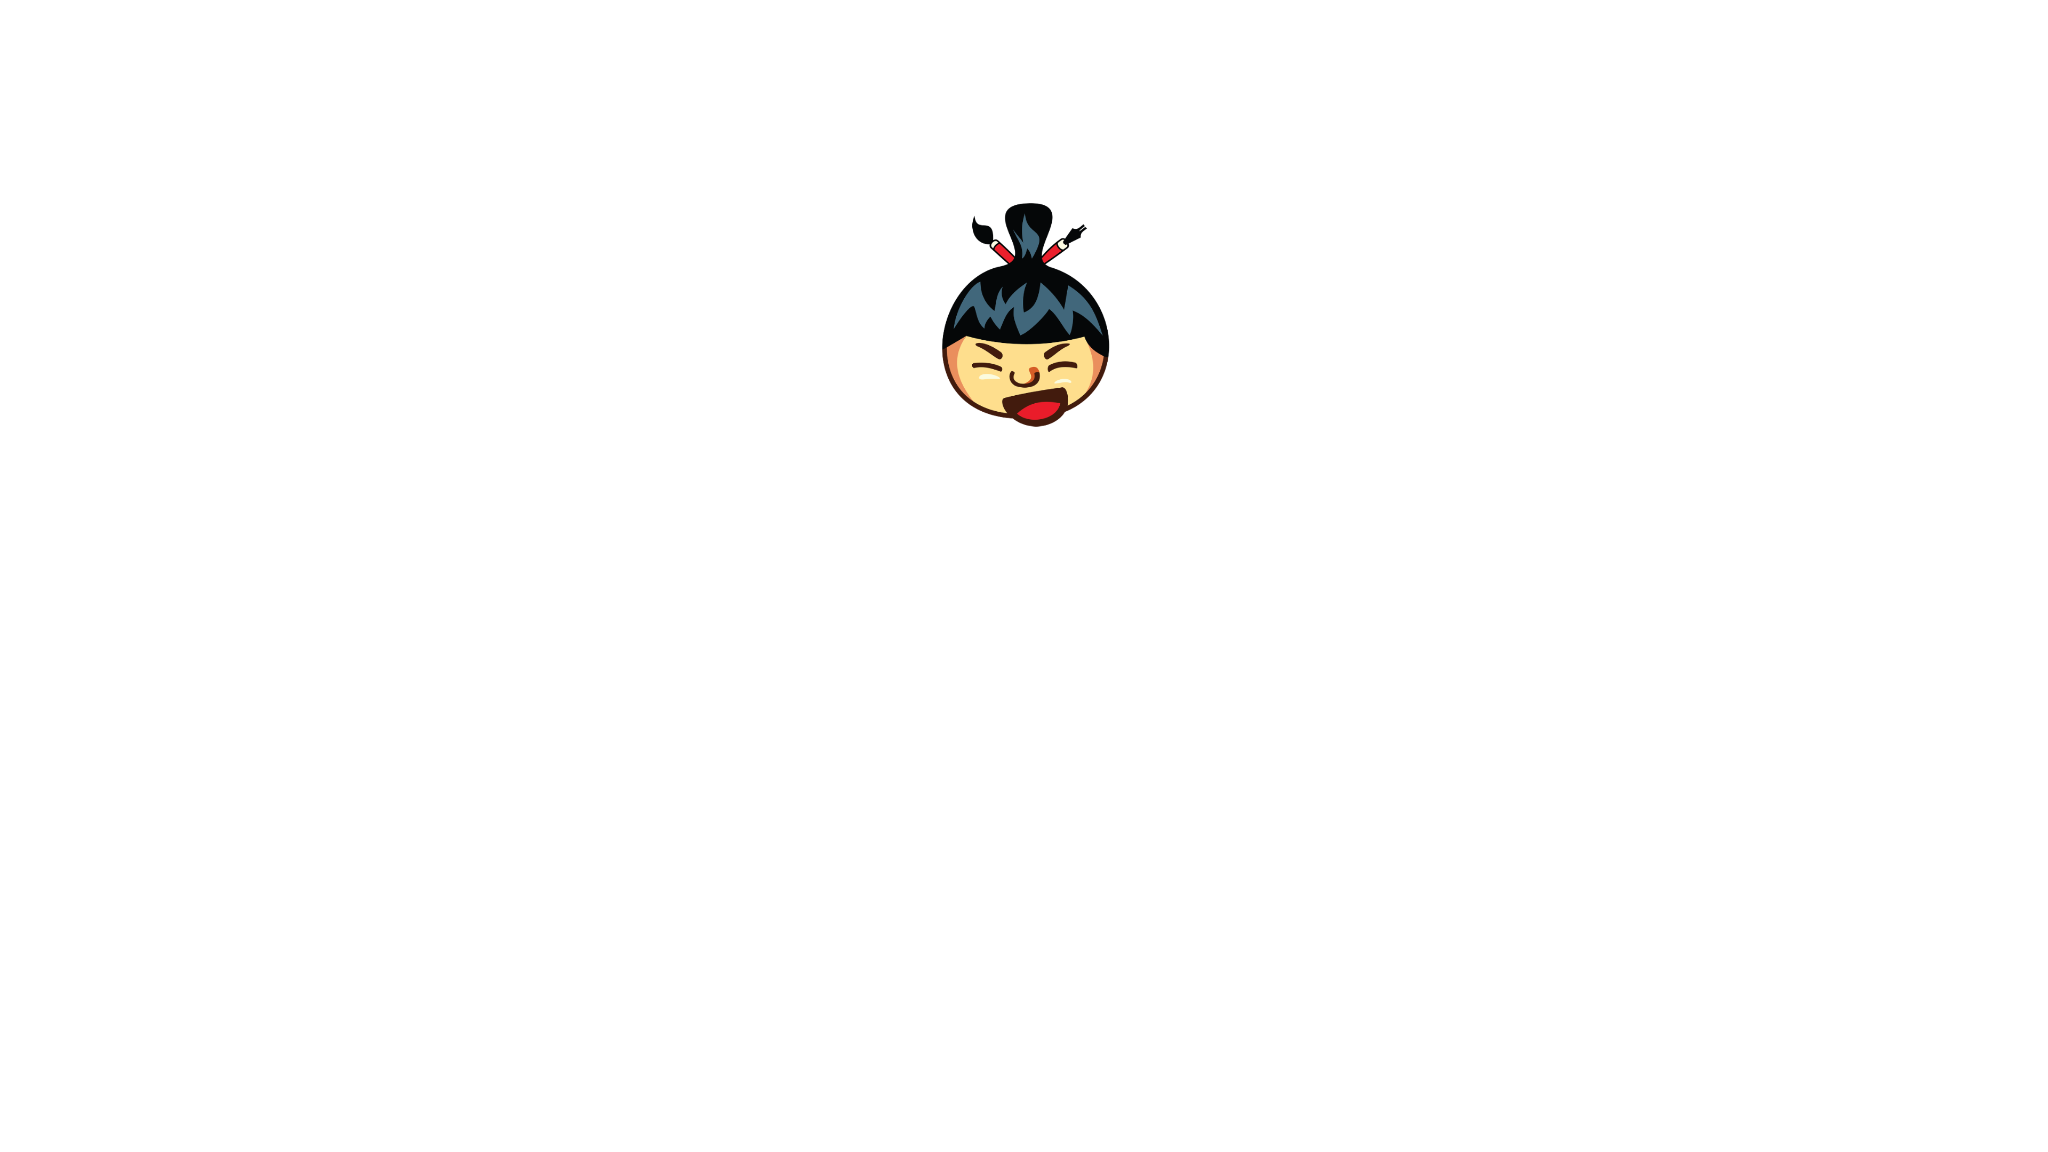 Sumo Video Intro - δημιουργήθηκε από Lauri Koutaniemi με paint